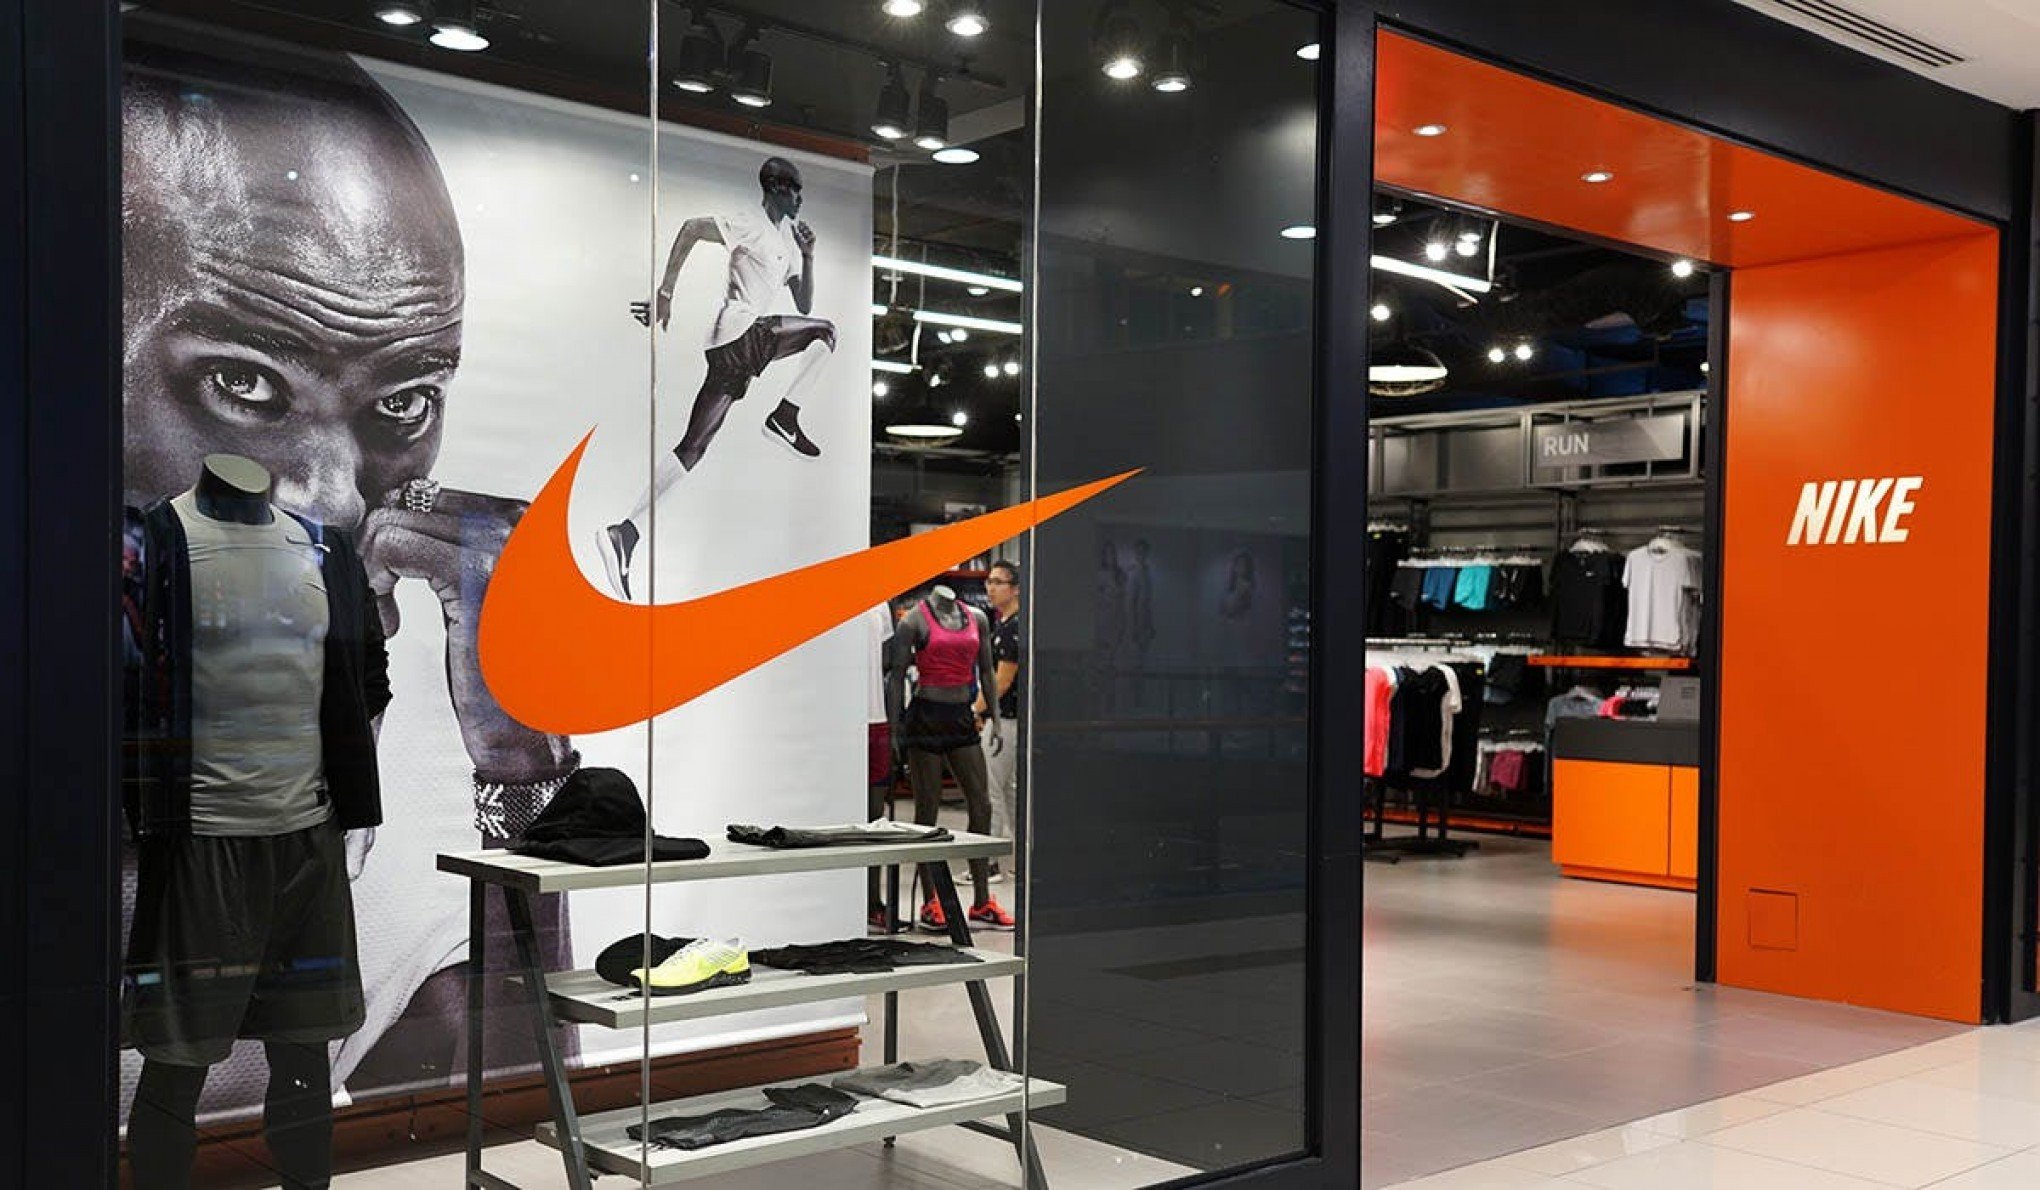 Nike rebatiza outlets e abre novas lojas no Brasil - Jornal Exclusivo